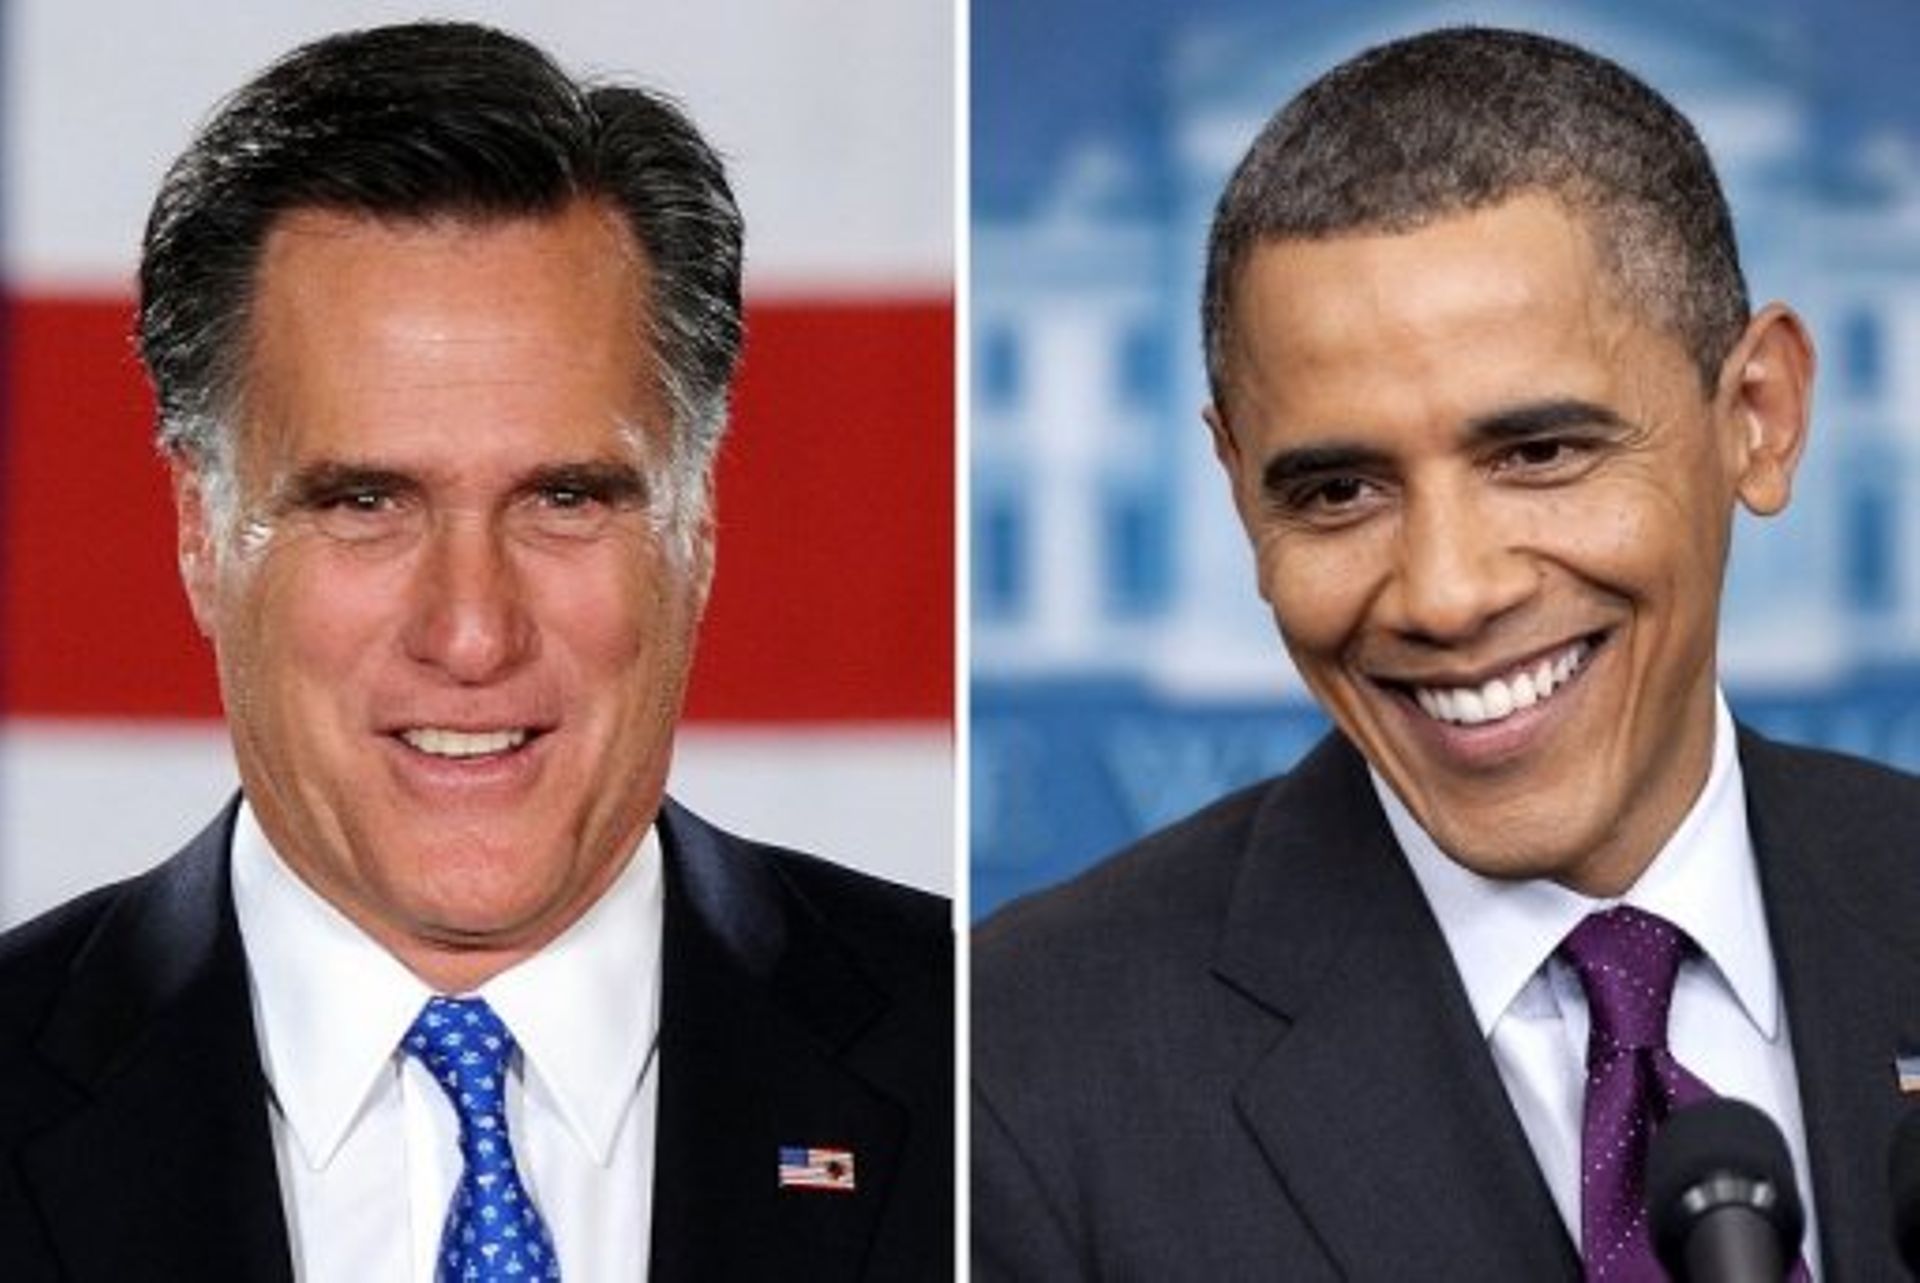 Romney domine Obama lors du premier débat